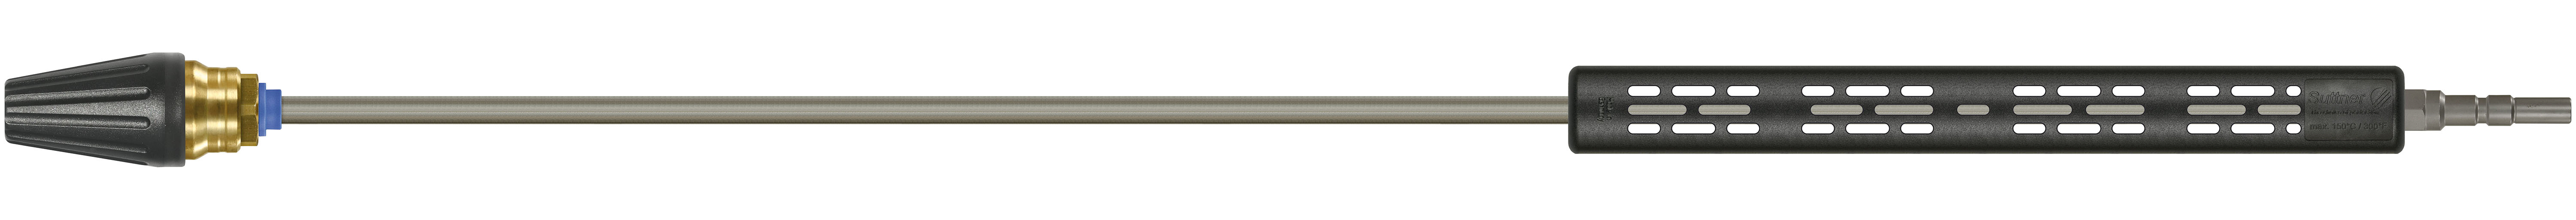 Rotabuse céramique avec lance 1000mm, 200-400 bar, Calibre 045